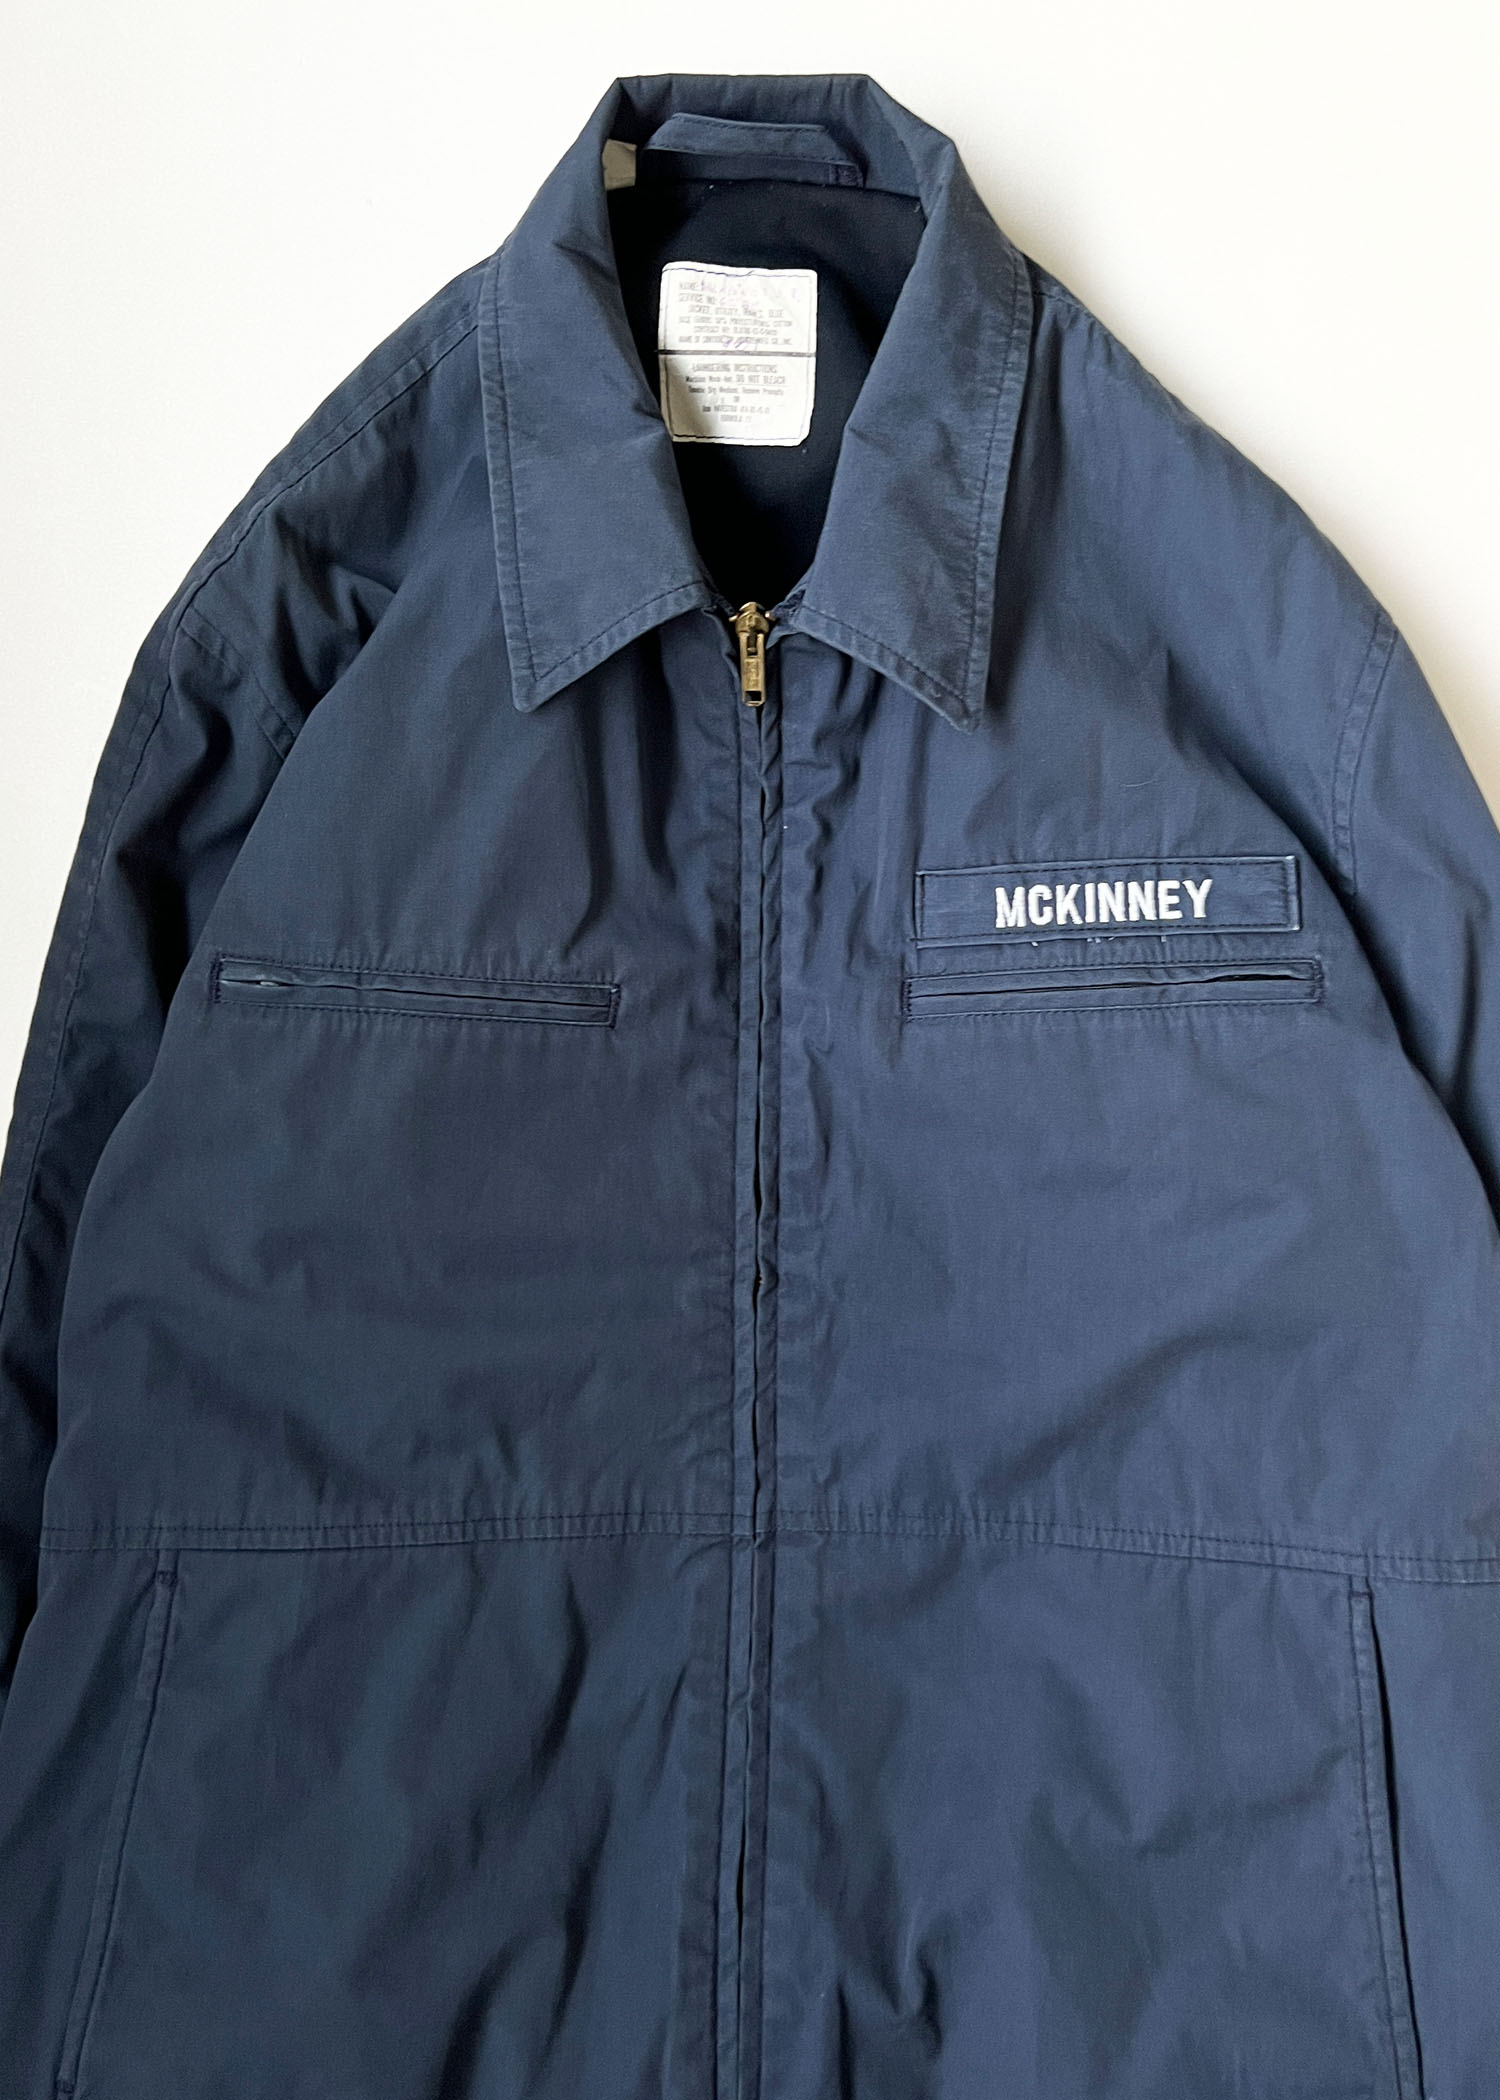 90s USN service jacket